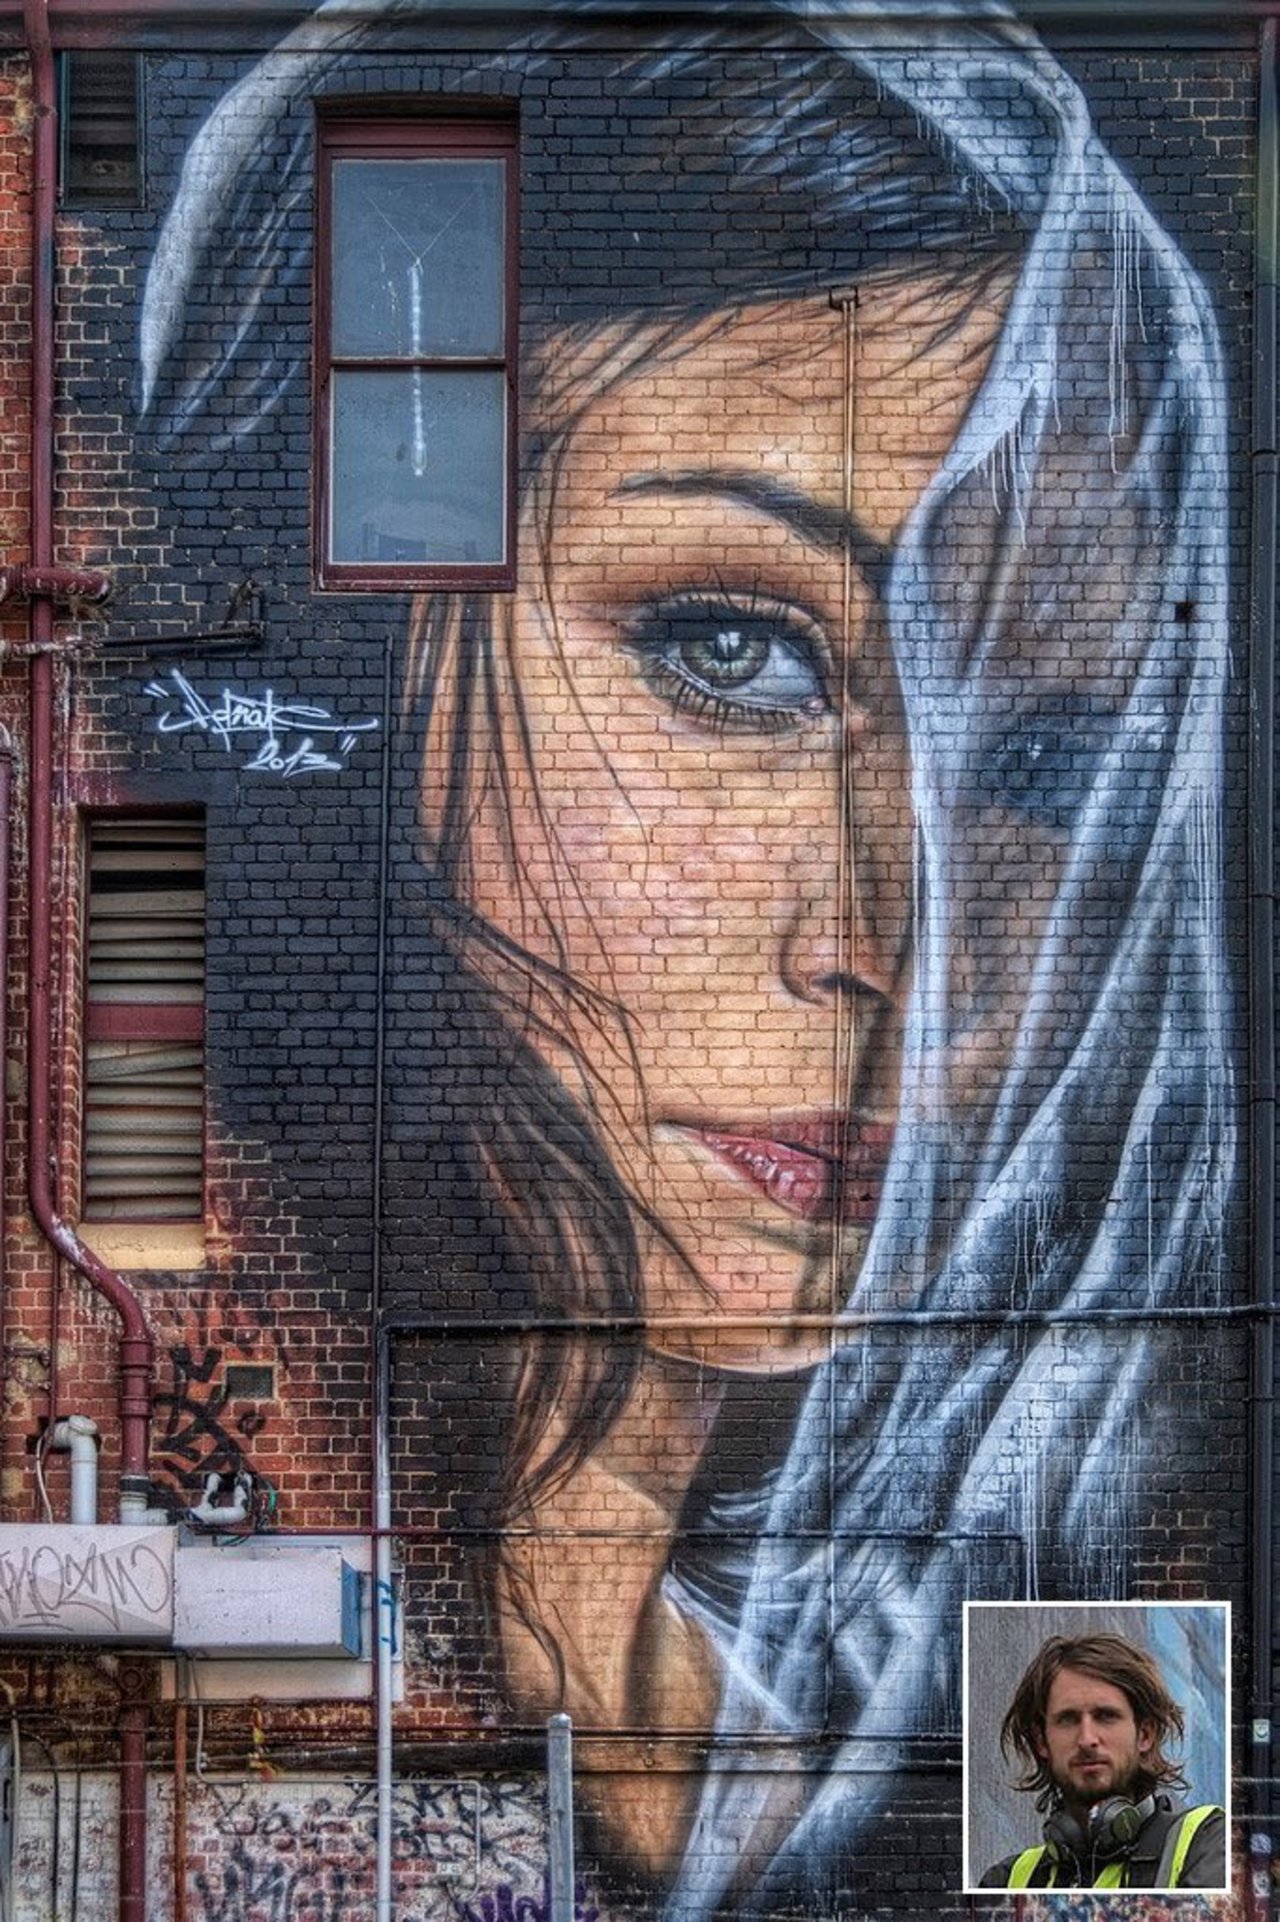 #mural Mural by Adnate, #Melbourne #Australia #Streetart #urbanart #graffiti #art https://t.co/CrkdzsjKZ9